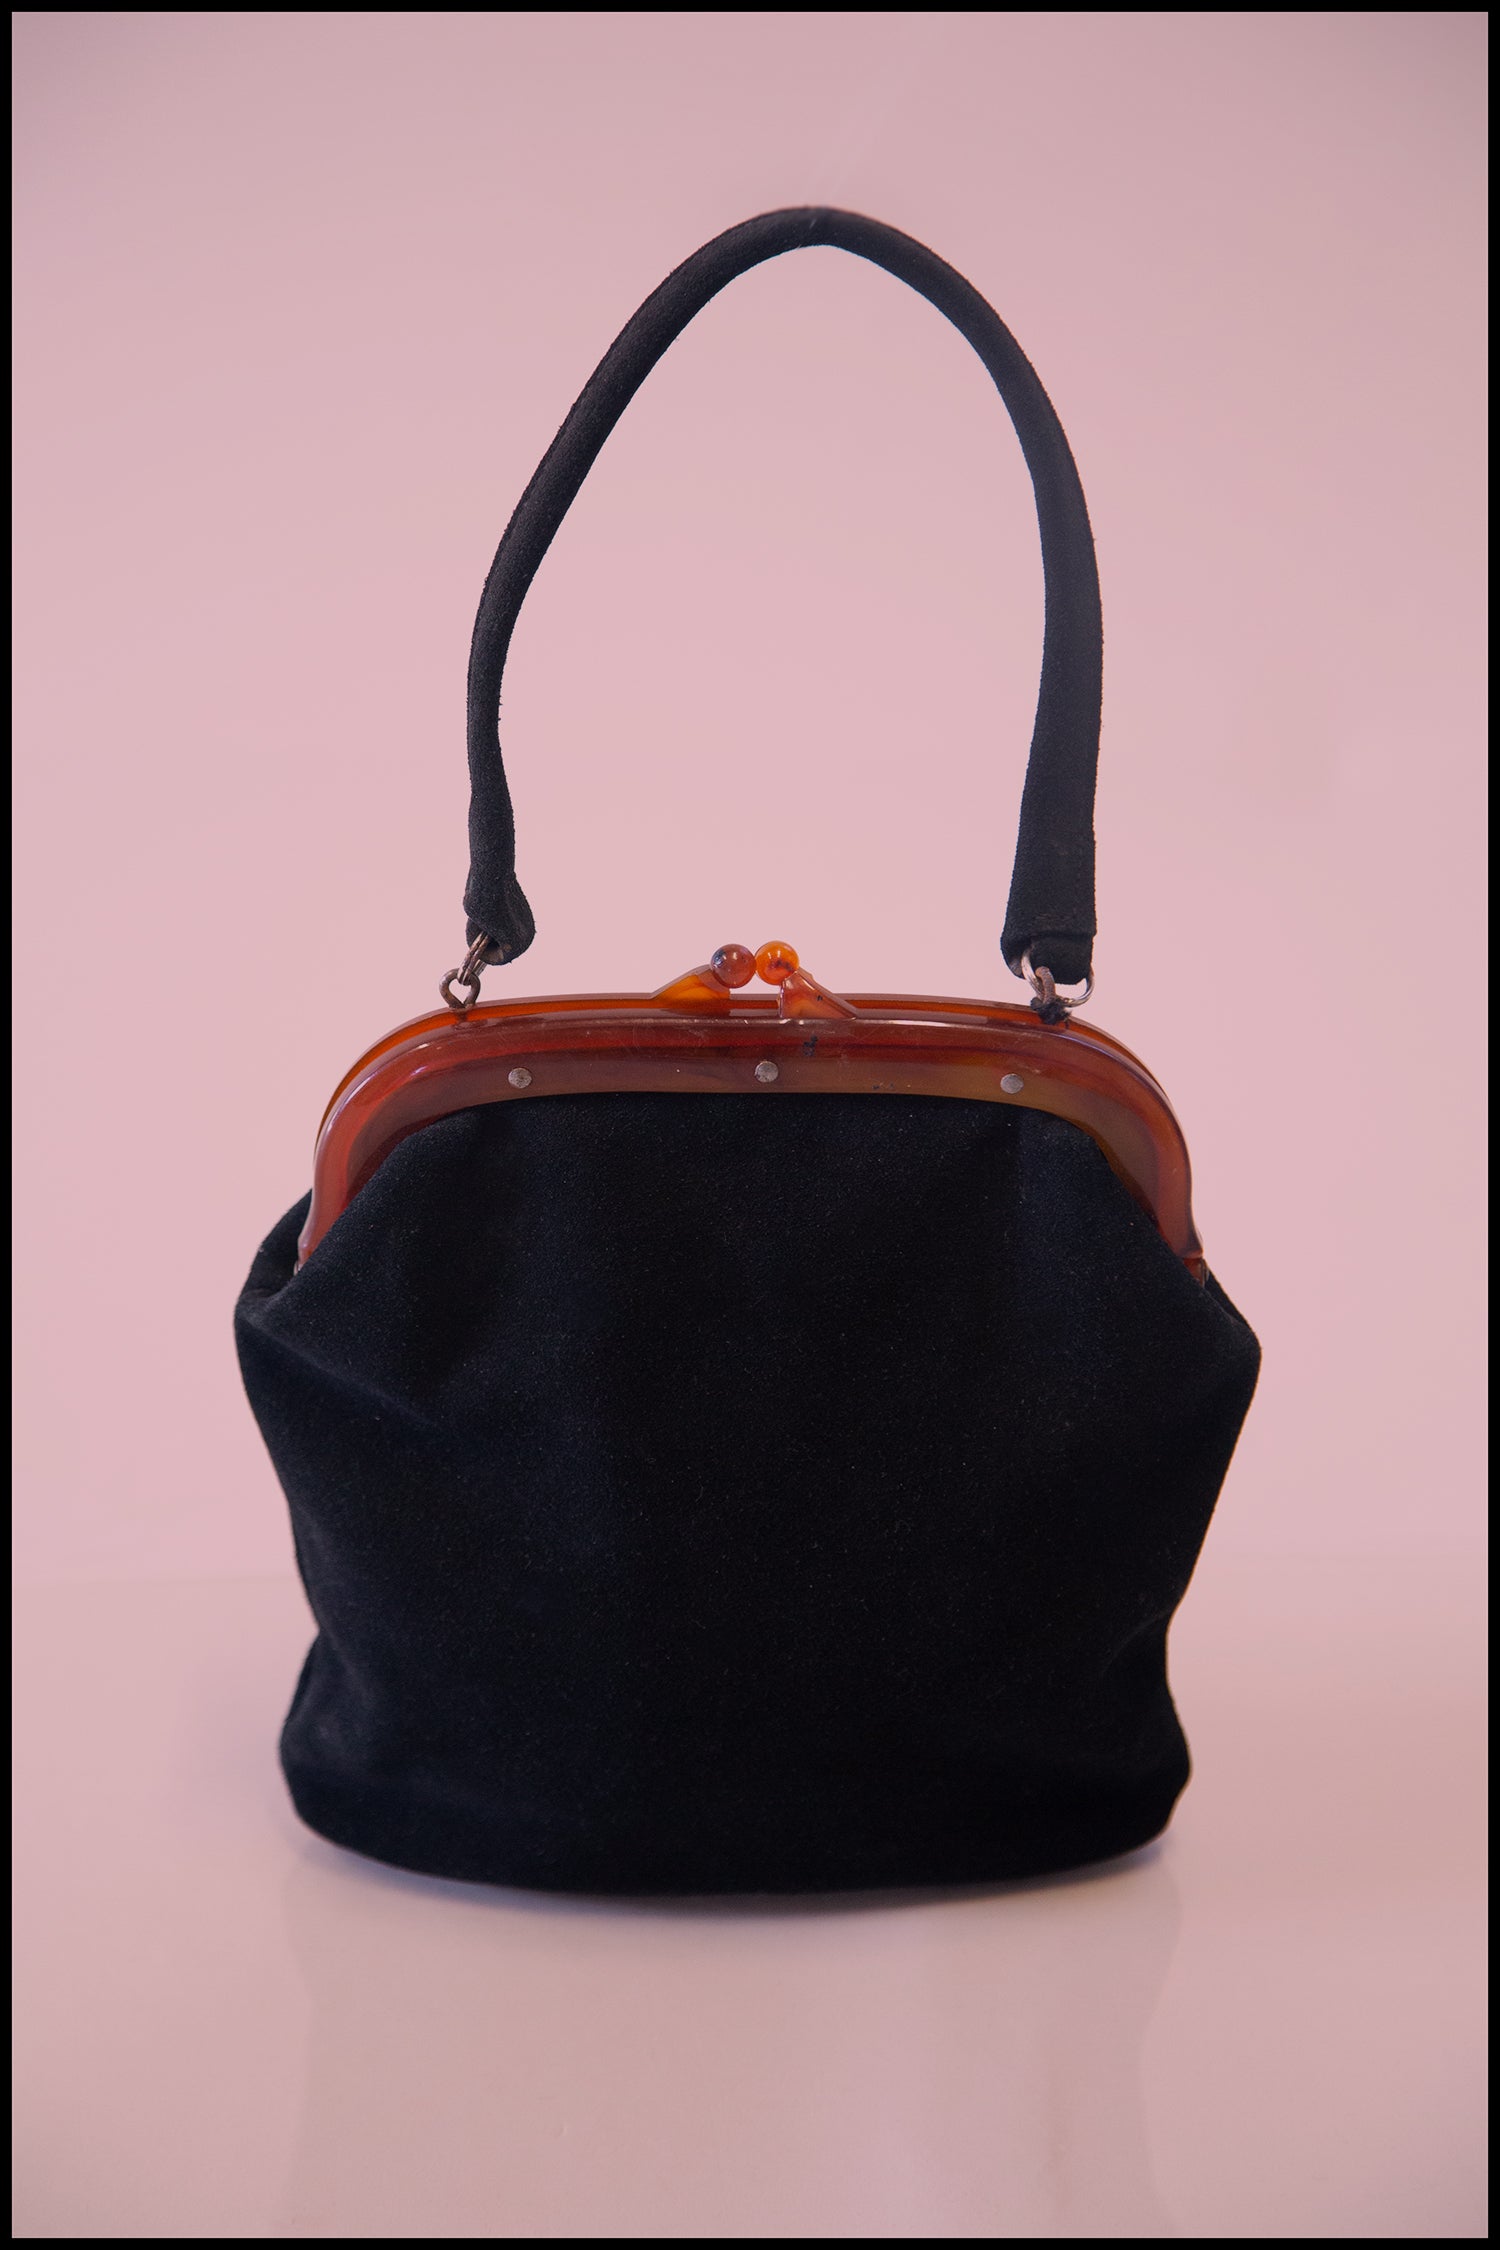 Vintage 1940s Black Suede Hand Bag